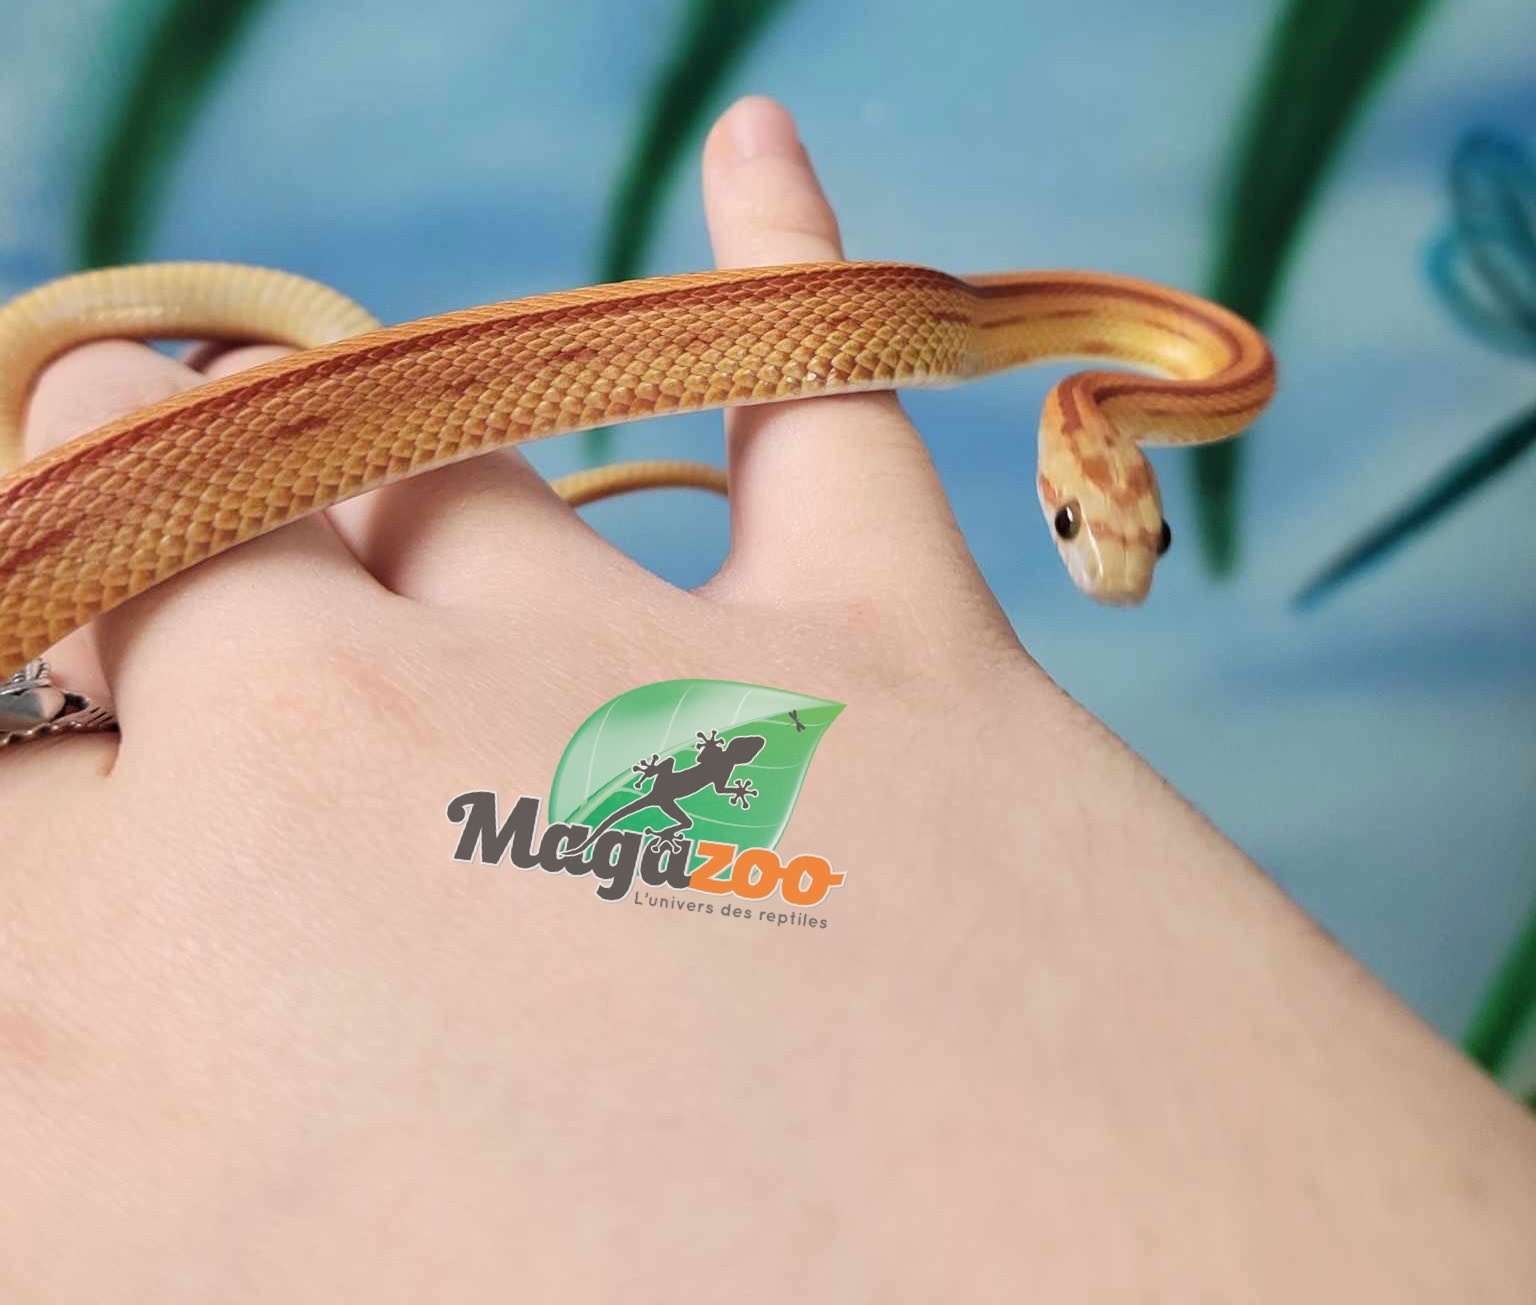 Magazoo Serpent des blés Hypo Stripe Femelle